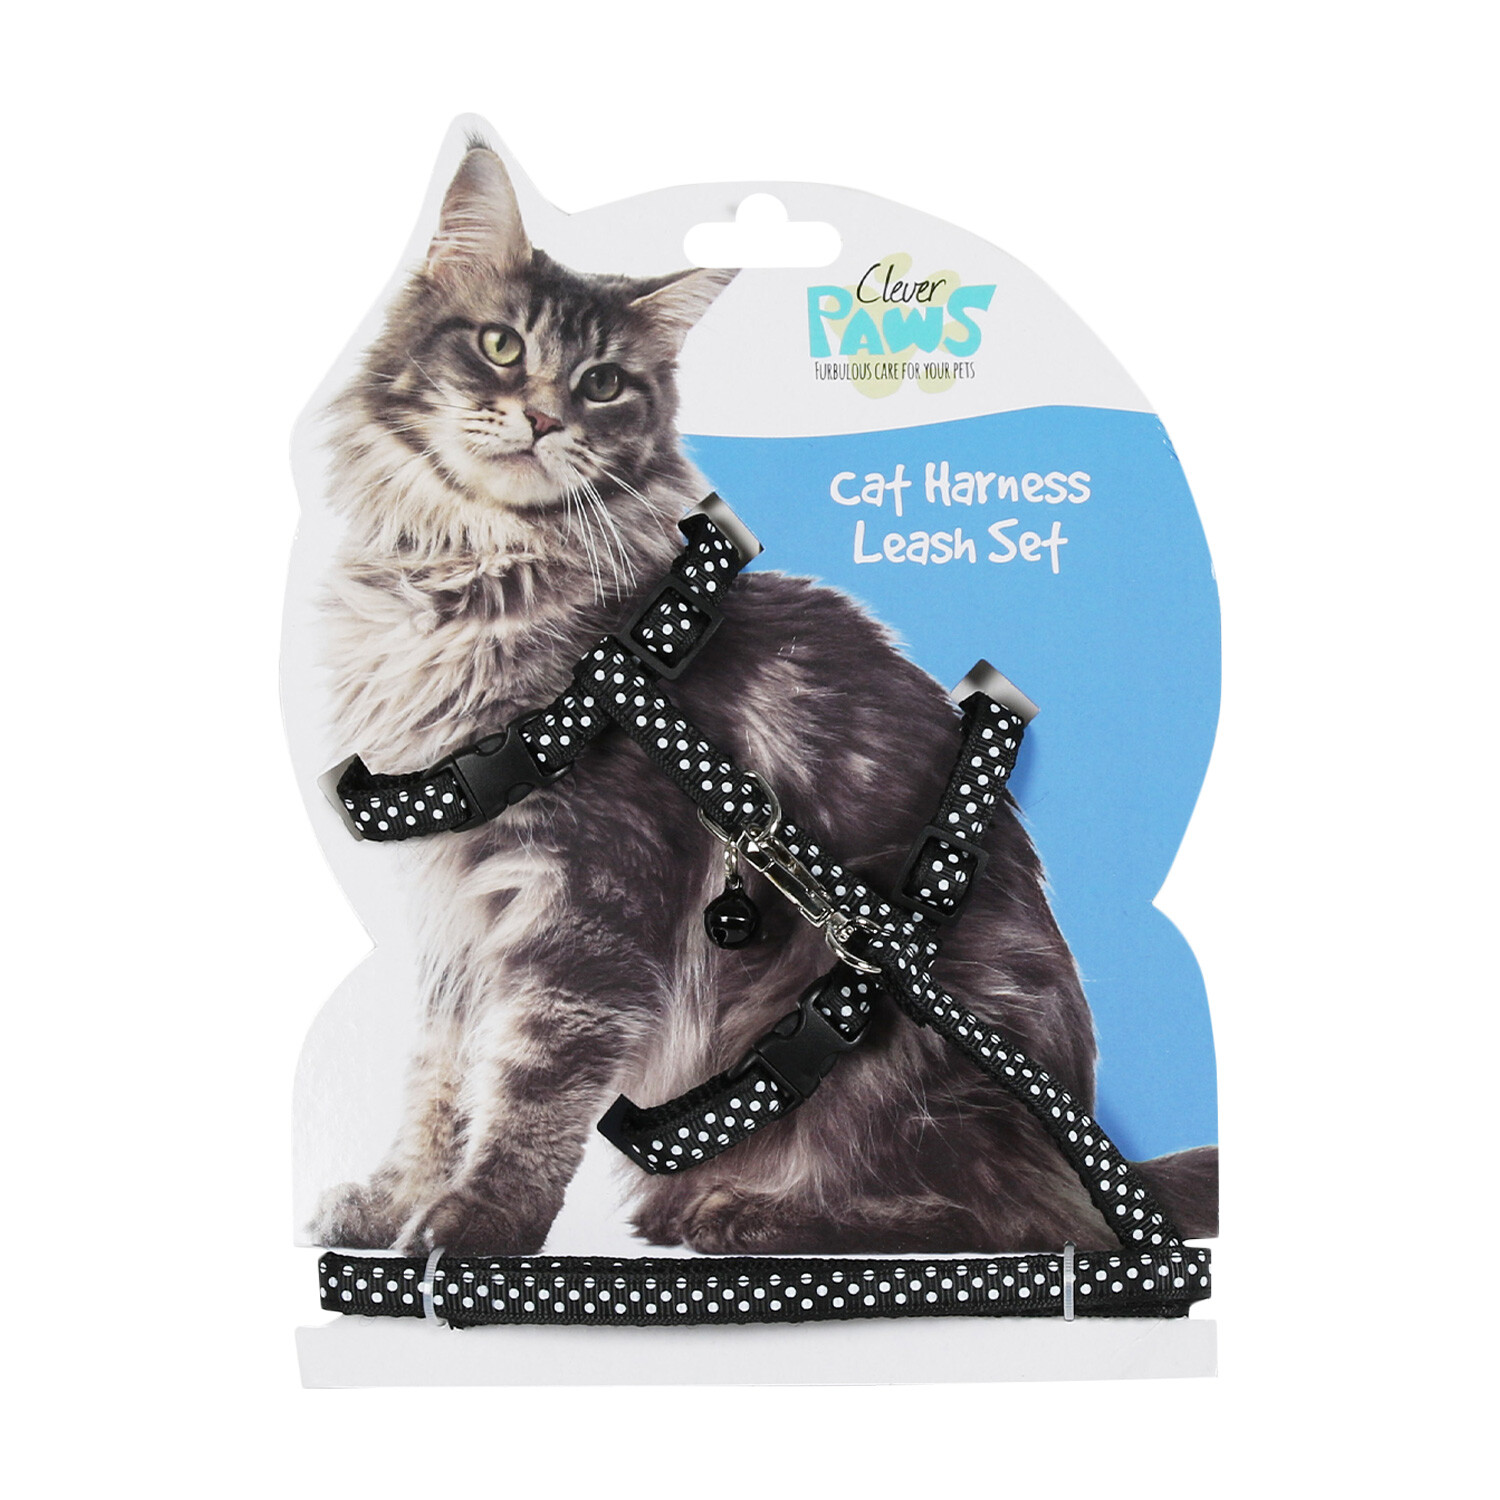 Cat Harness and Leash Set - Black Image